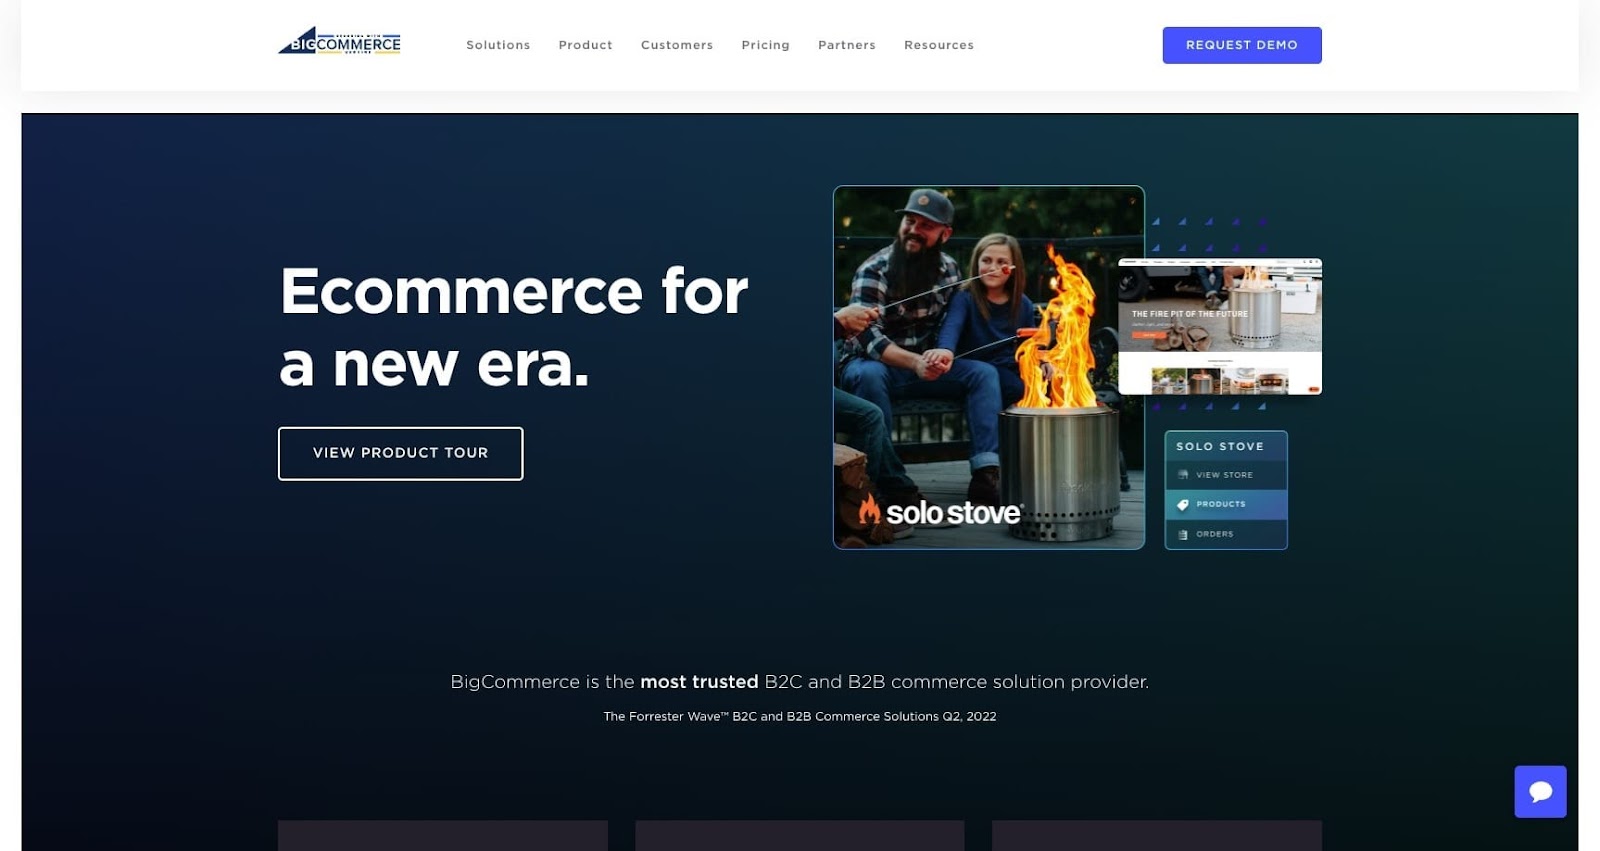 bigcommerce ecommerce online selling platform homepage